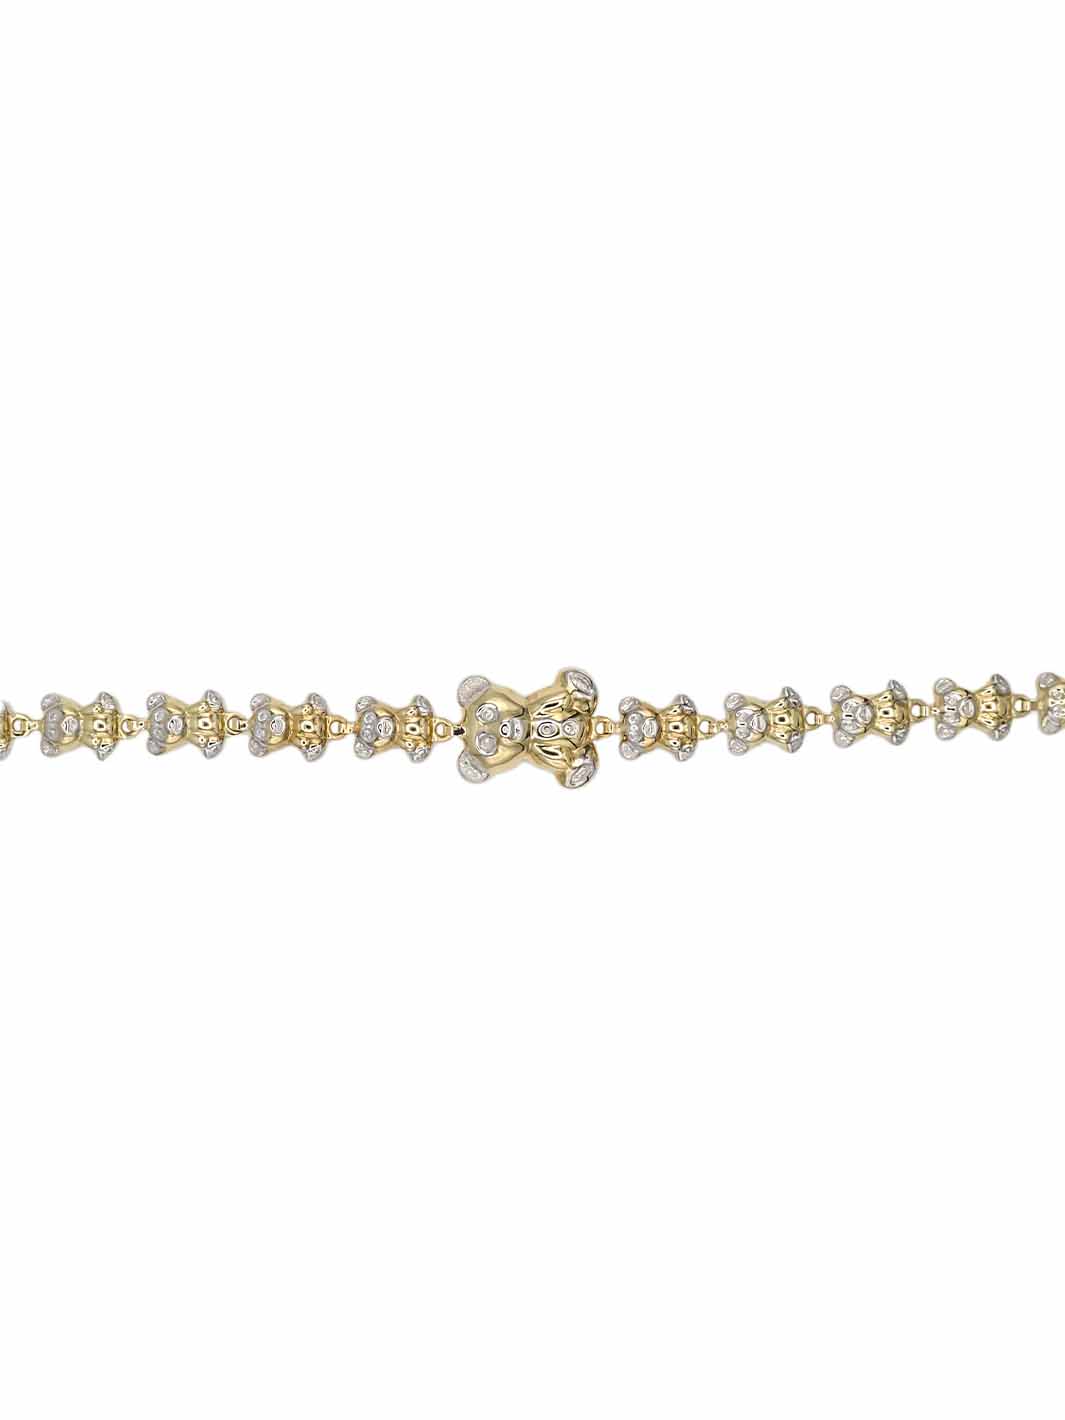 10k Gold Teddy Bear Bracelet